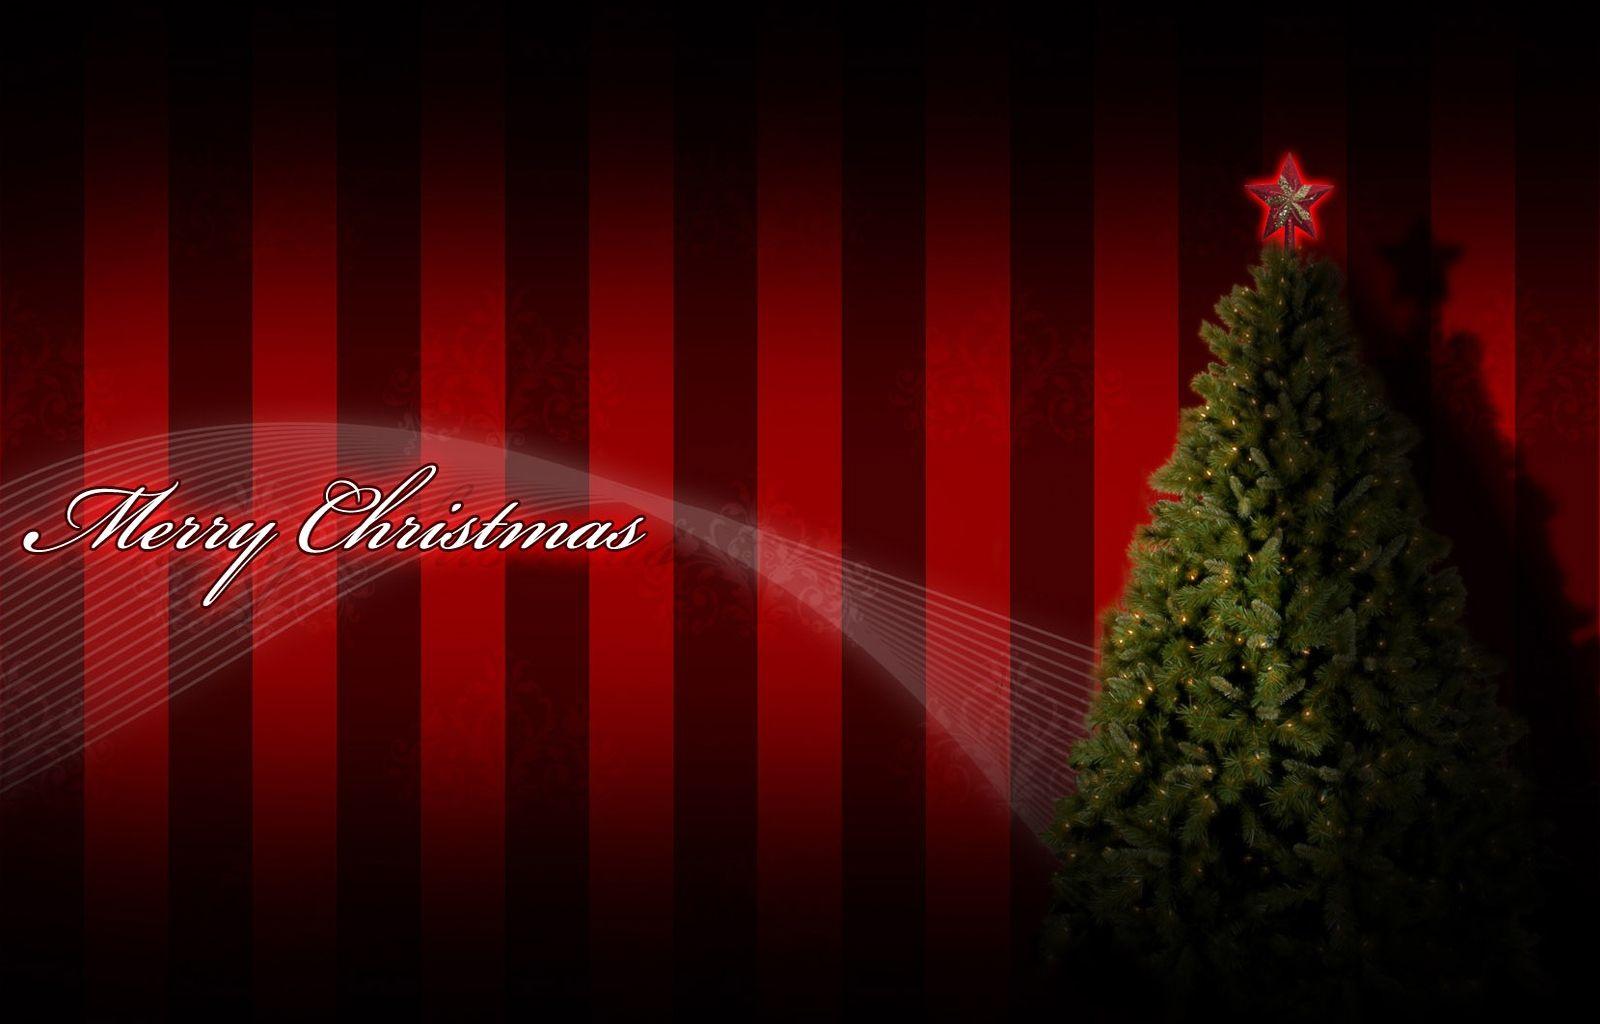 school closings. Hairstyles: Happy Christmas. Christmas Tree. Happy